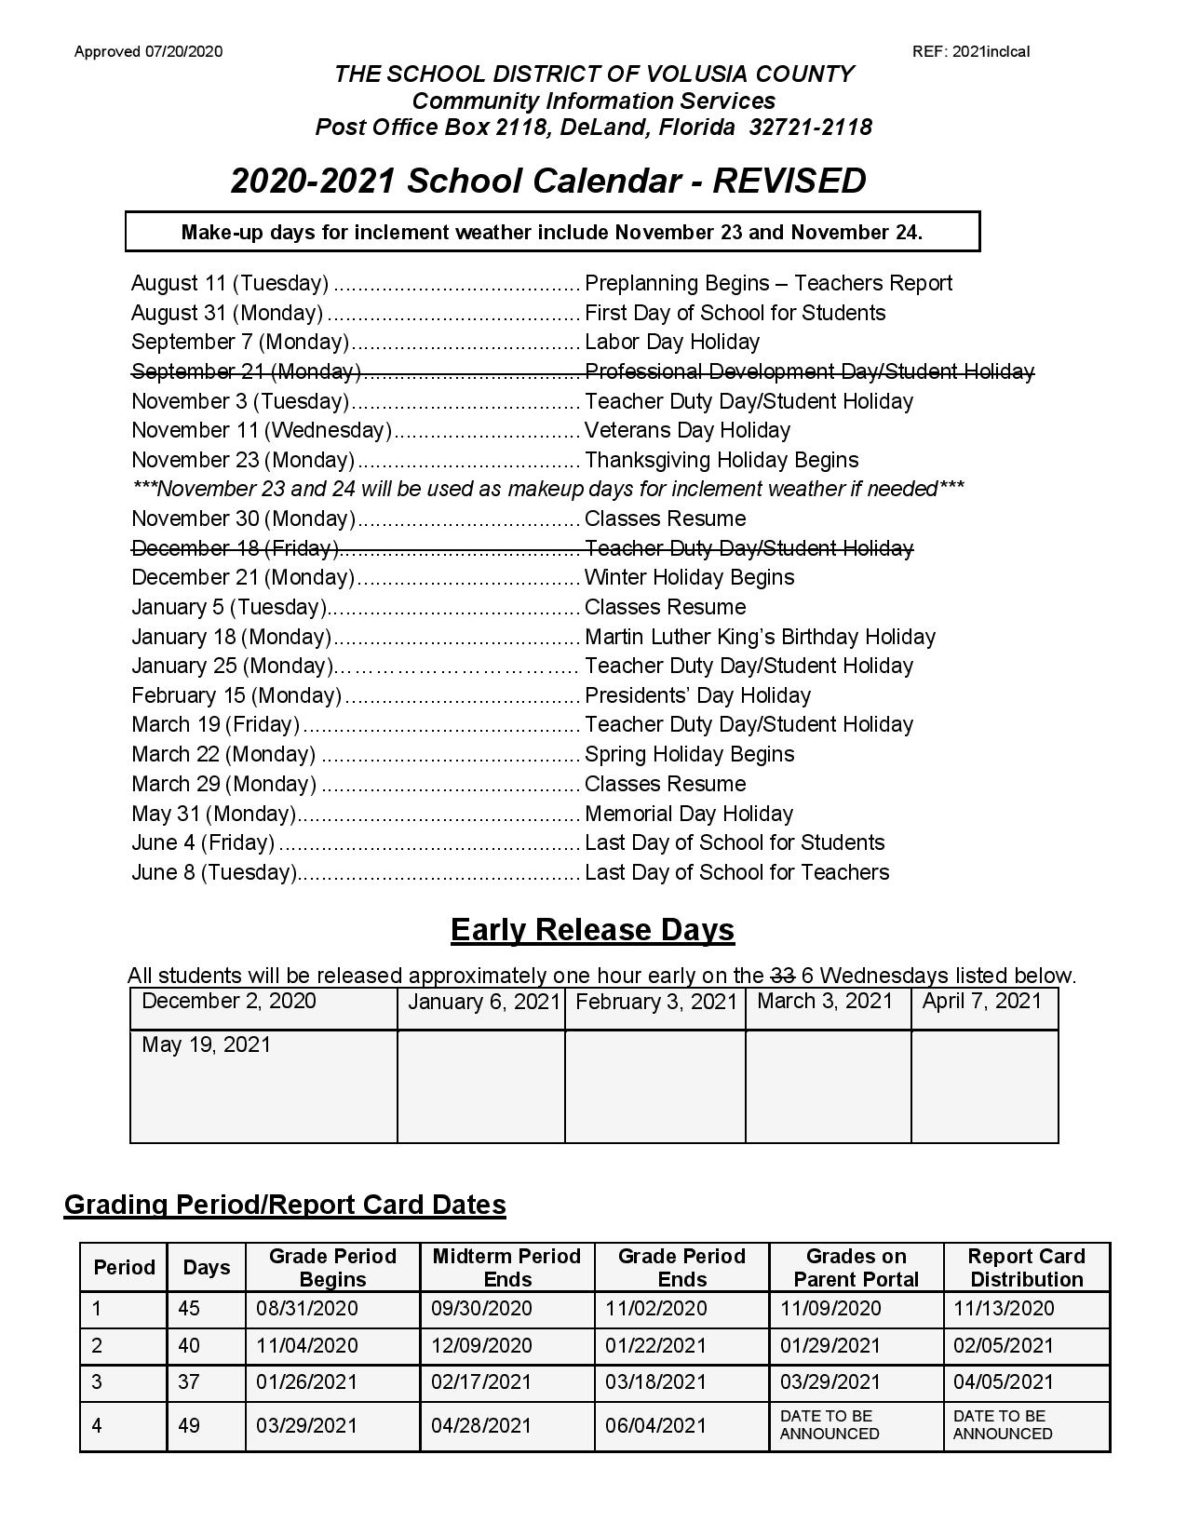 Volusia County Schools Calendar 2020 2021 in PDF